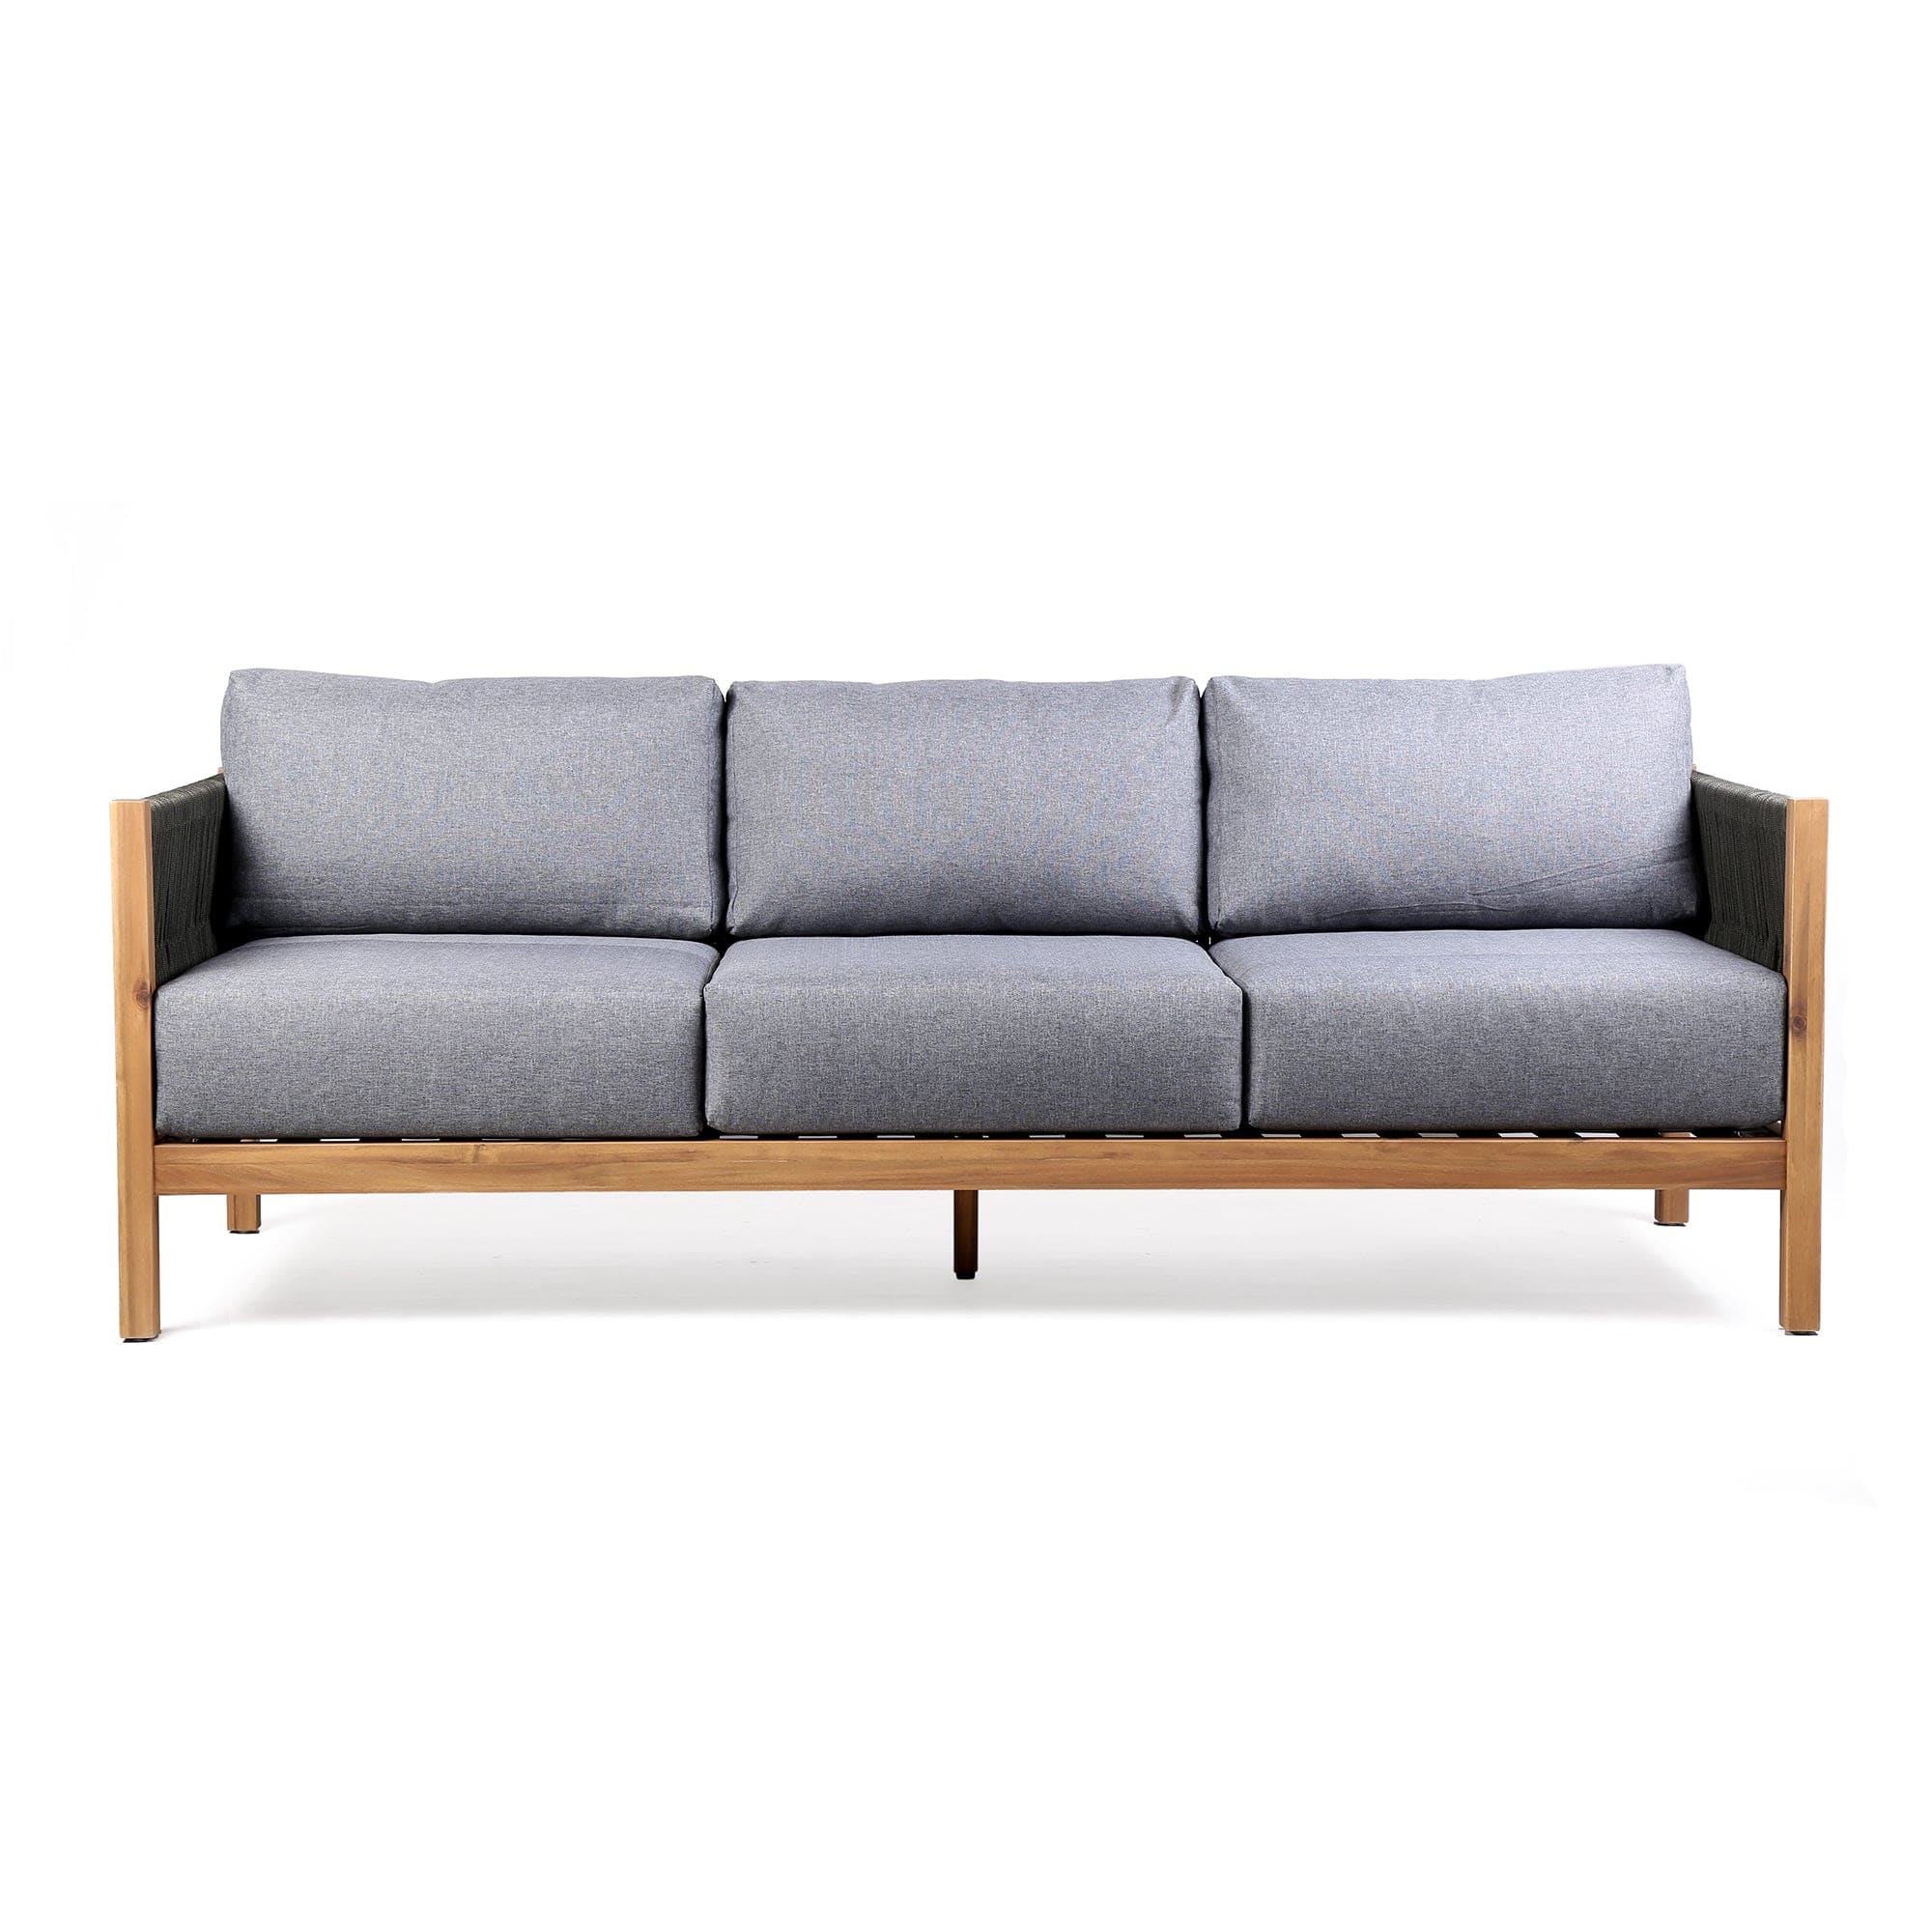 Armen Living Outdoor Sofa Armen Living | Sienna Outdoor Eucalyptus Sofa in Teak Finish with Grey Cushions | LCSISOWDTK